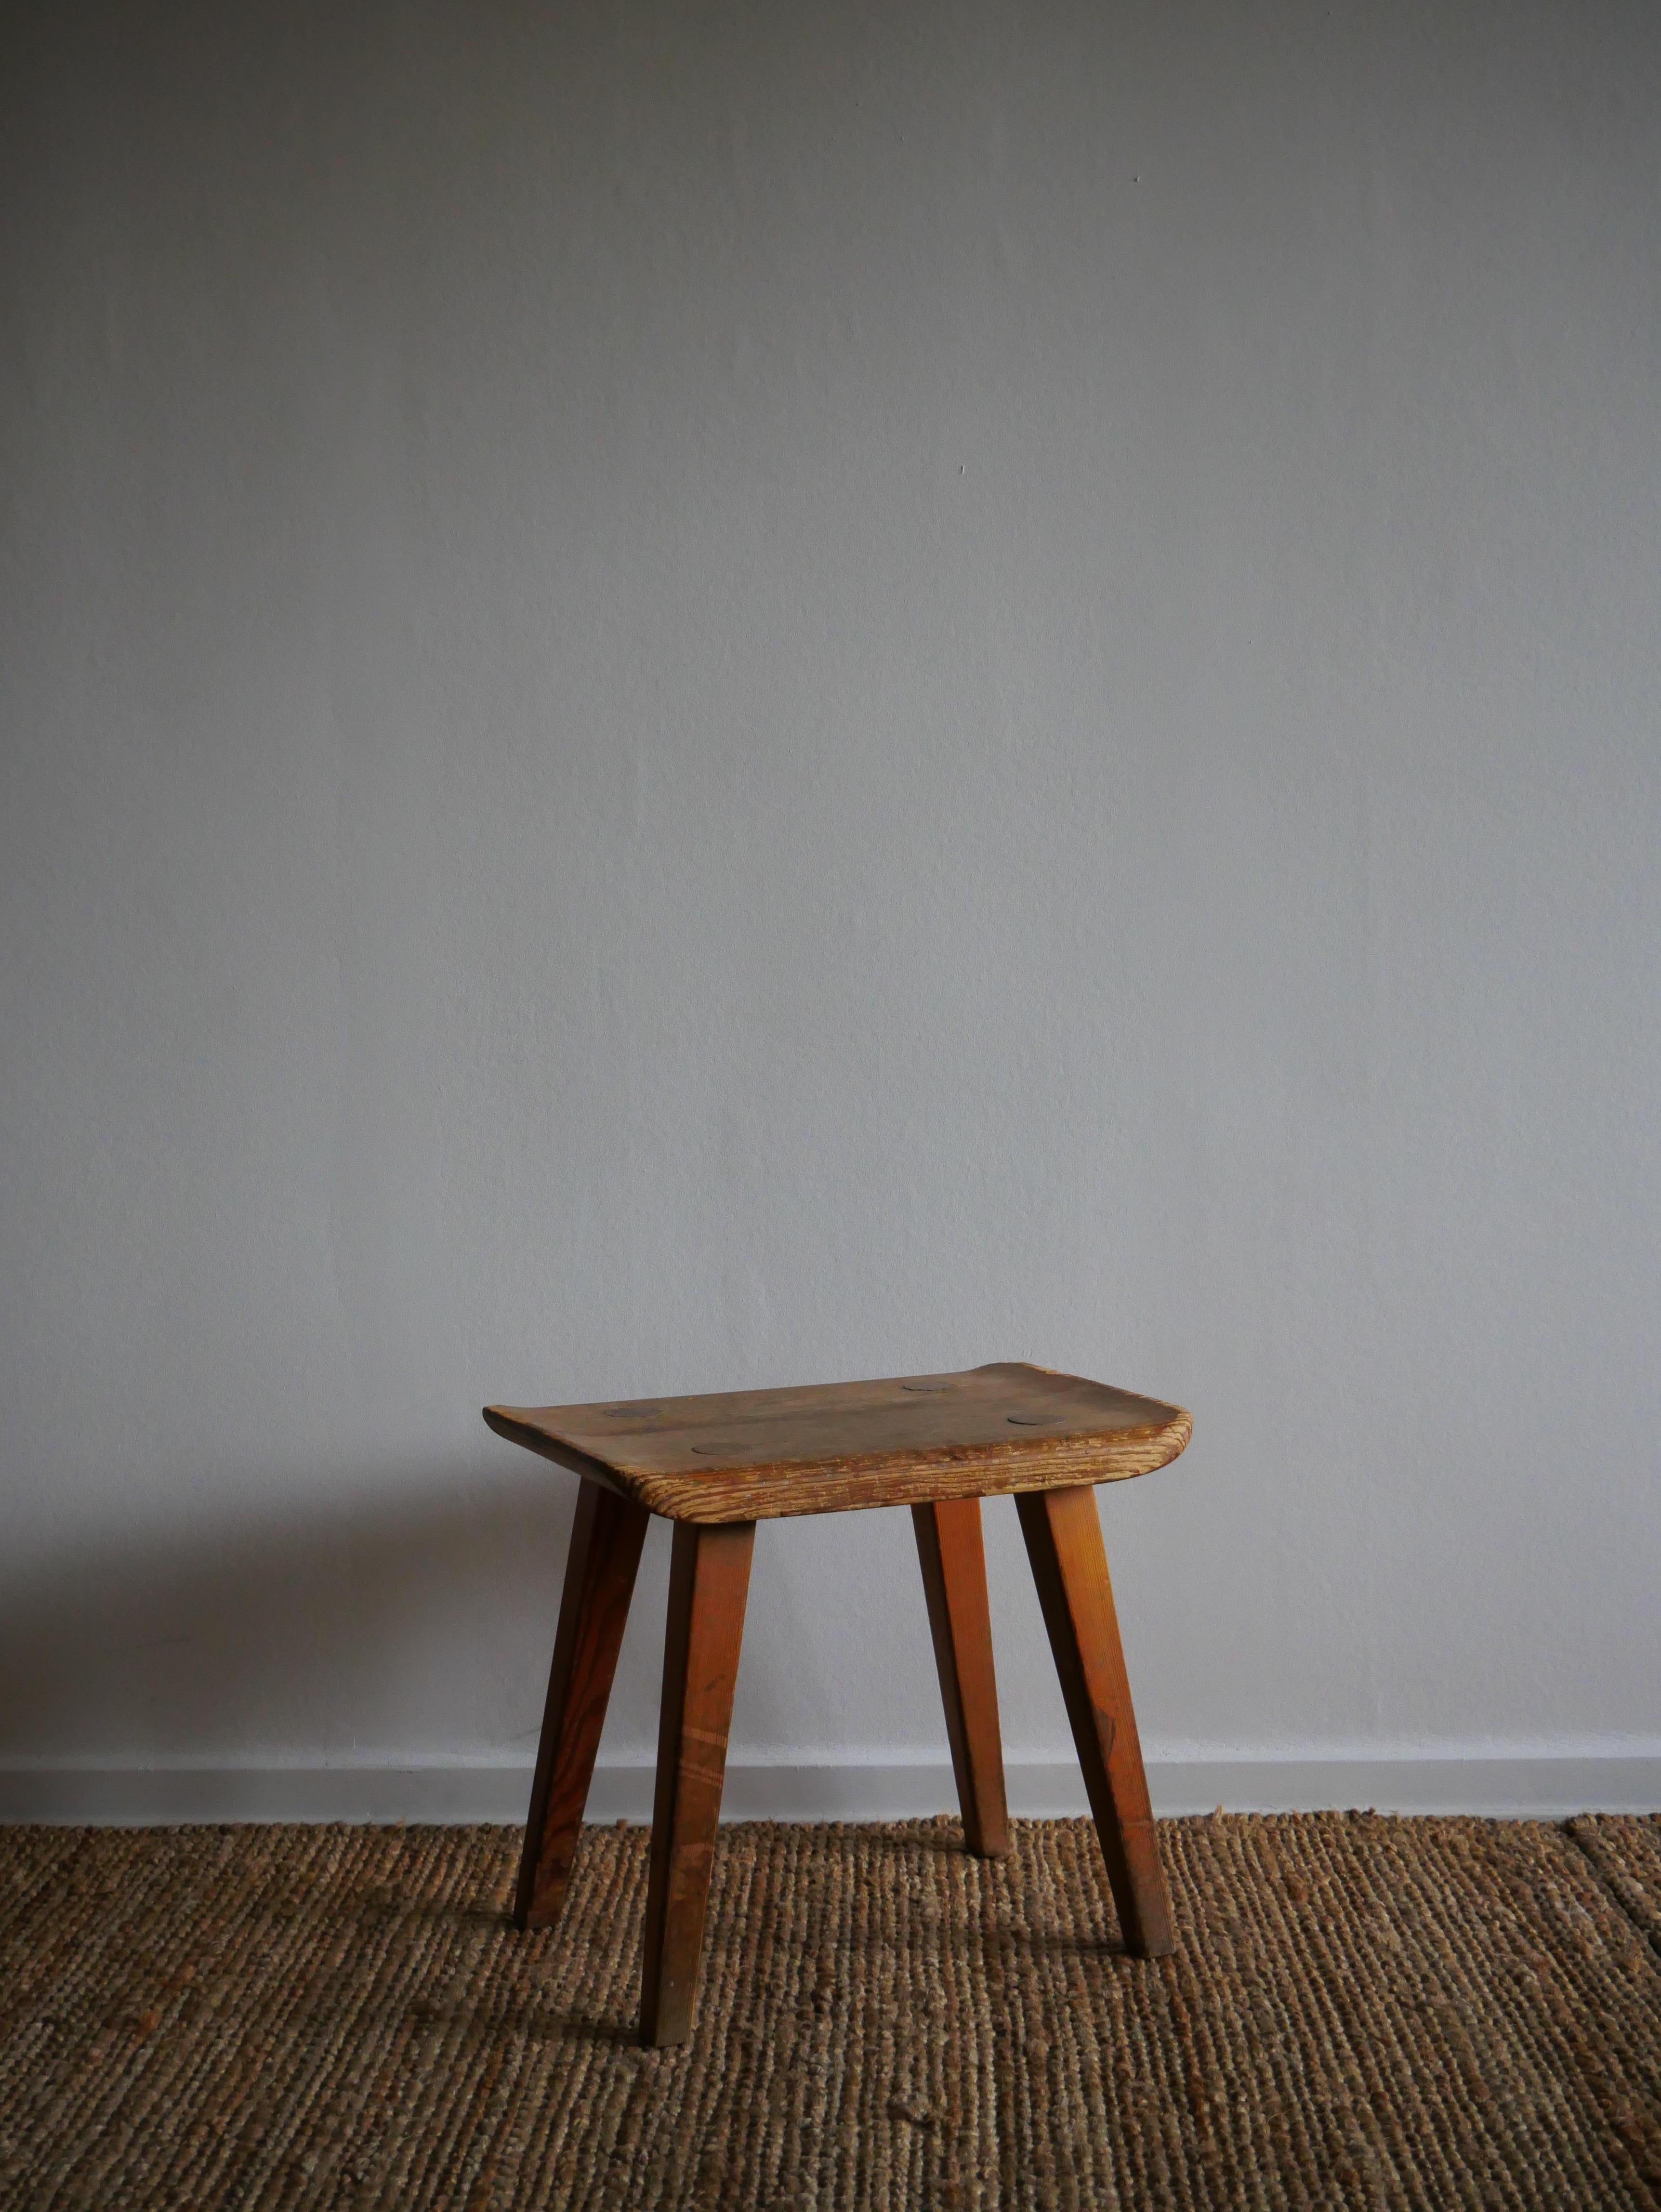 Carl Malmsten, Visingsö stool - Waggeryds Möbelfabriken, Sweden.
Simple but elegant handmade craftsmanship.
Has a thick patina and worned edges.

  